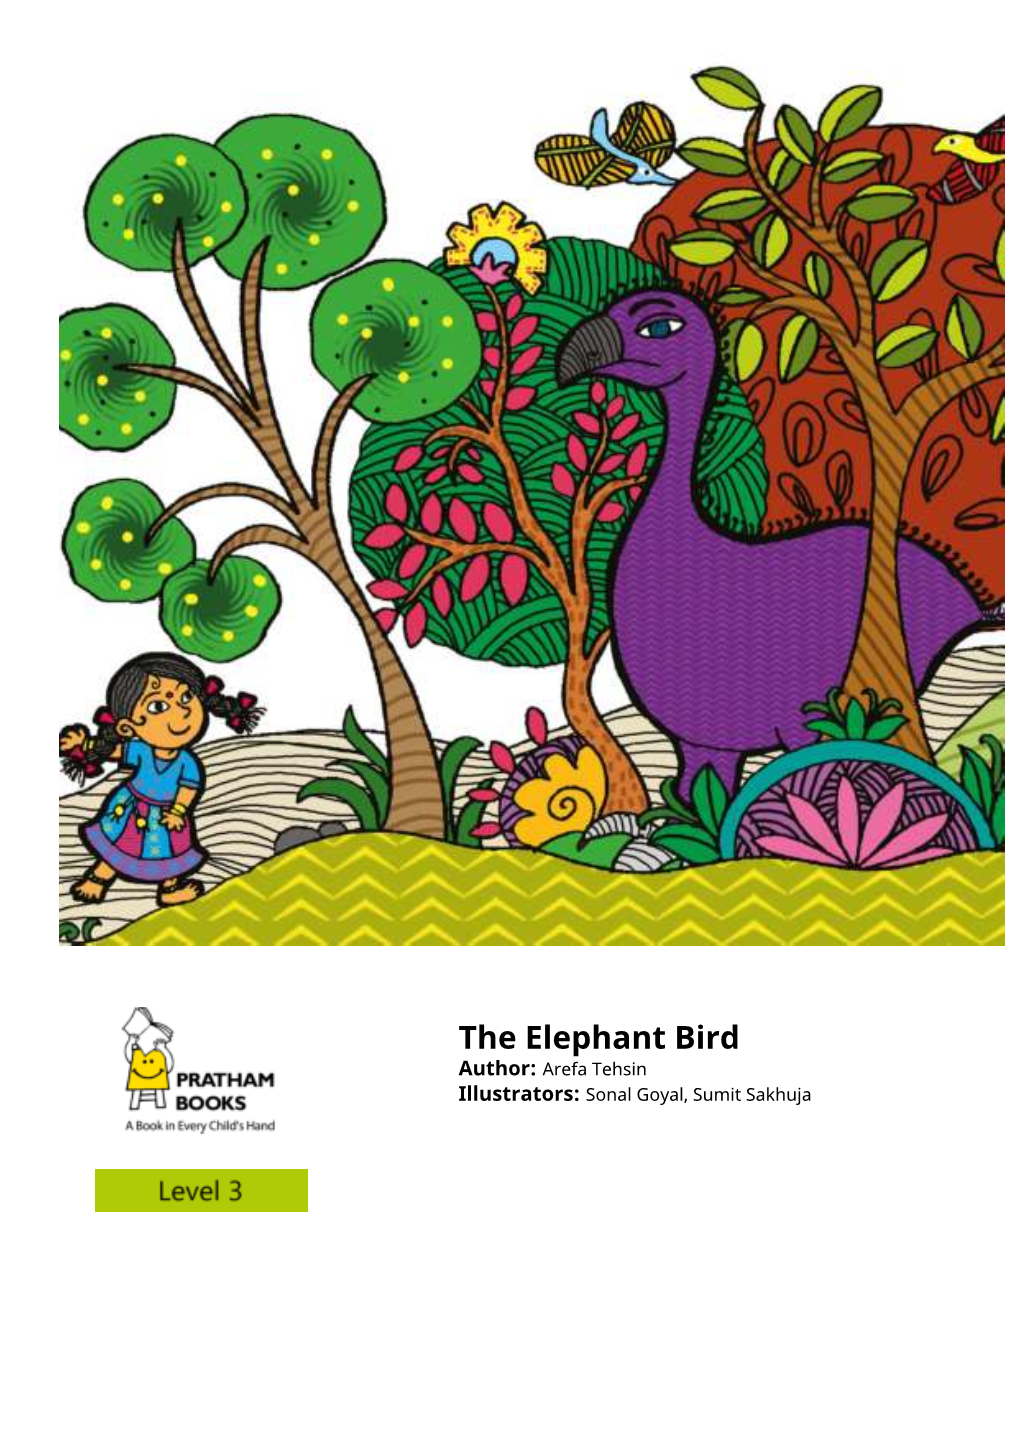 The Elephant Bird Author: Arefa Tehsin Illustrators: Sonal Goyal, Sumit Sakhuja Munia Knew That the Giant, One-Feathered Elephant Bird Had Not Swallowed the Horse